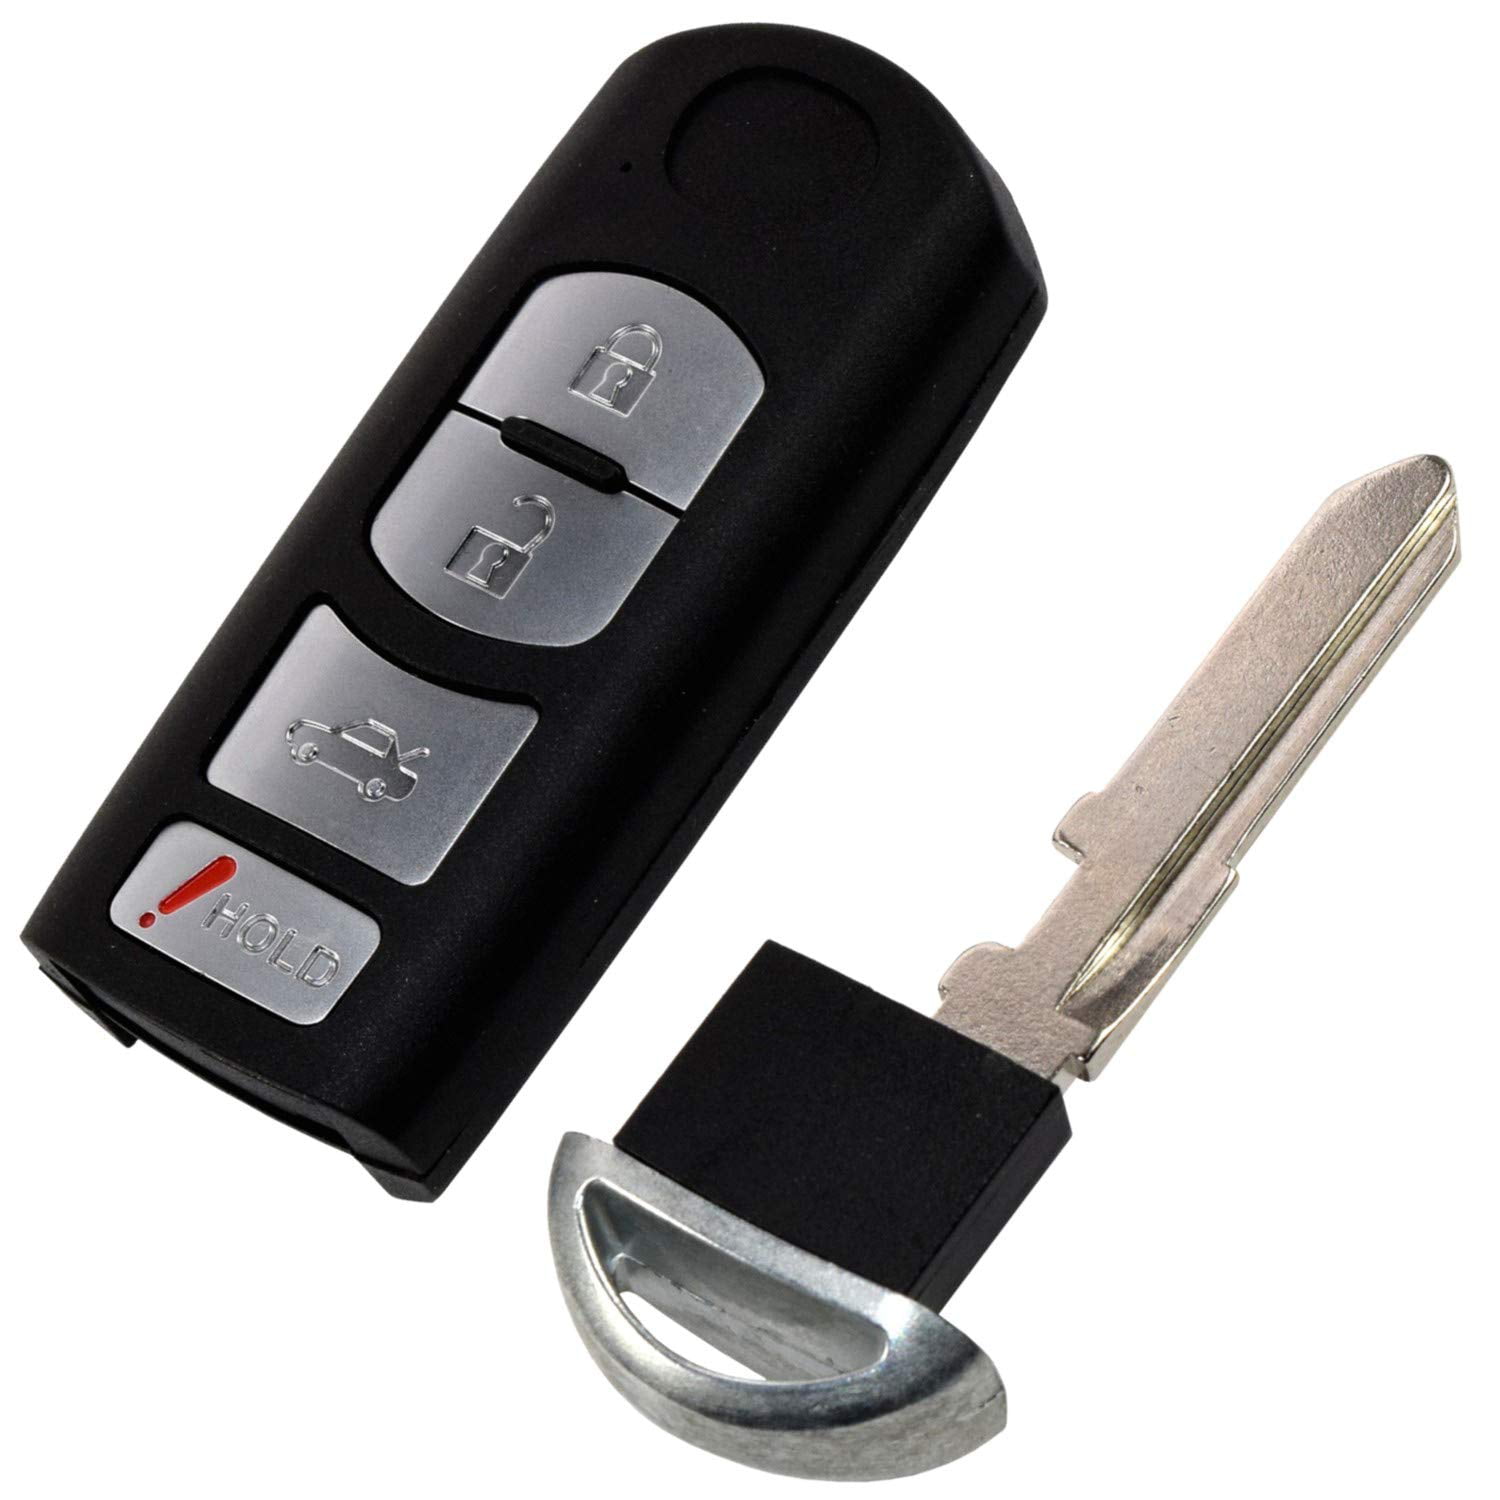 Remote For 2009 2010 2011 2012 2013 Mazda 6 Smart Keyless Entry Car Key Fob